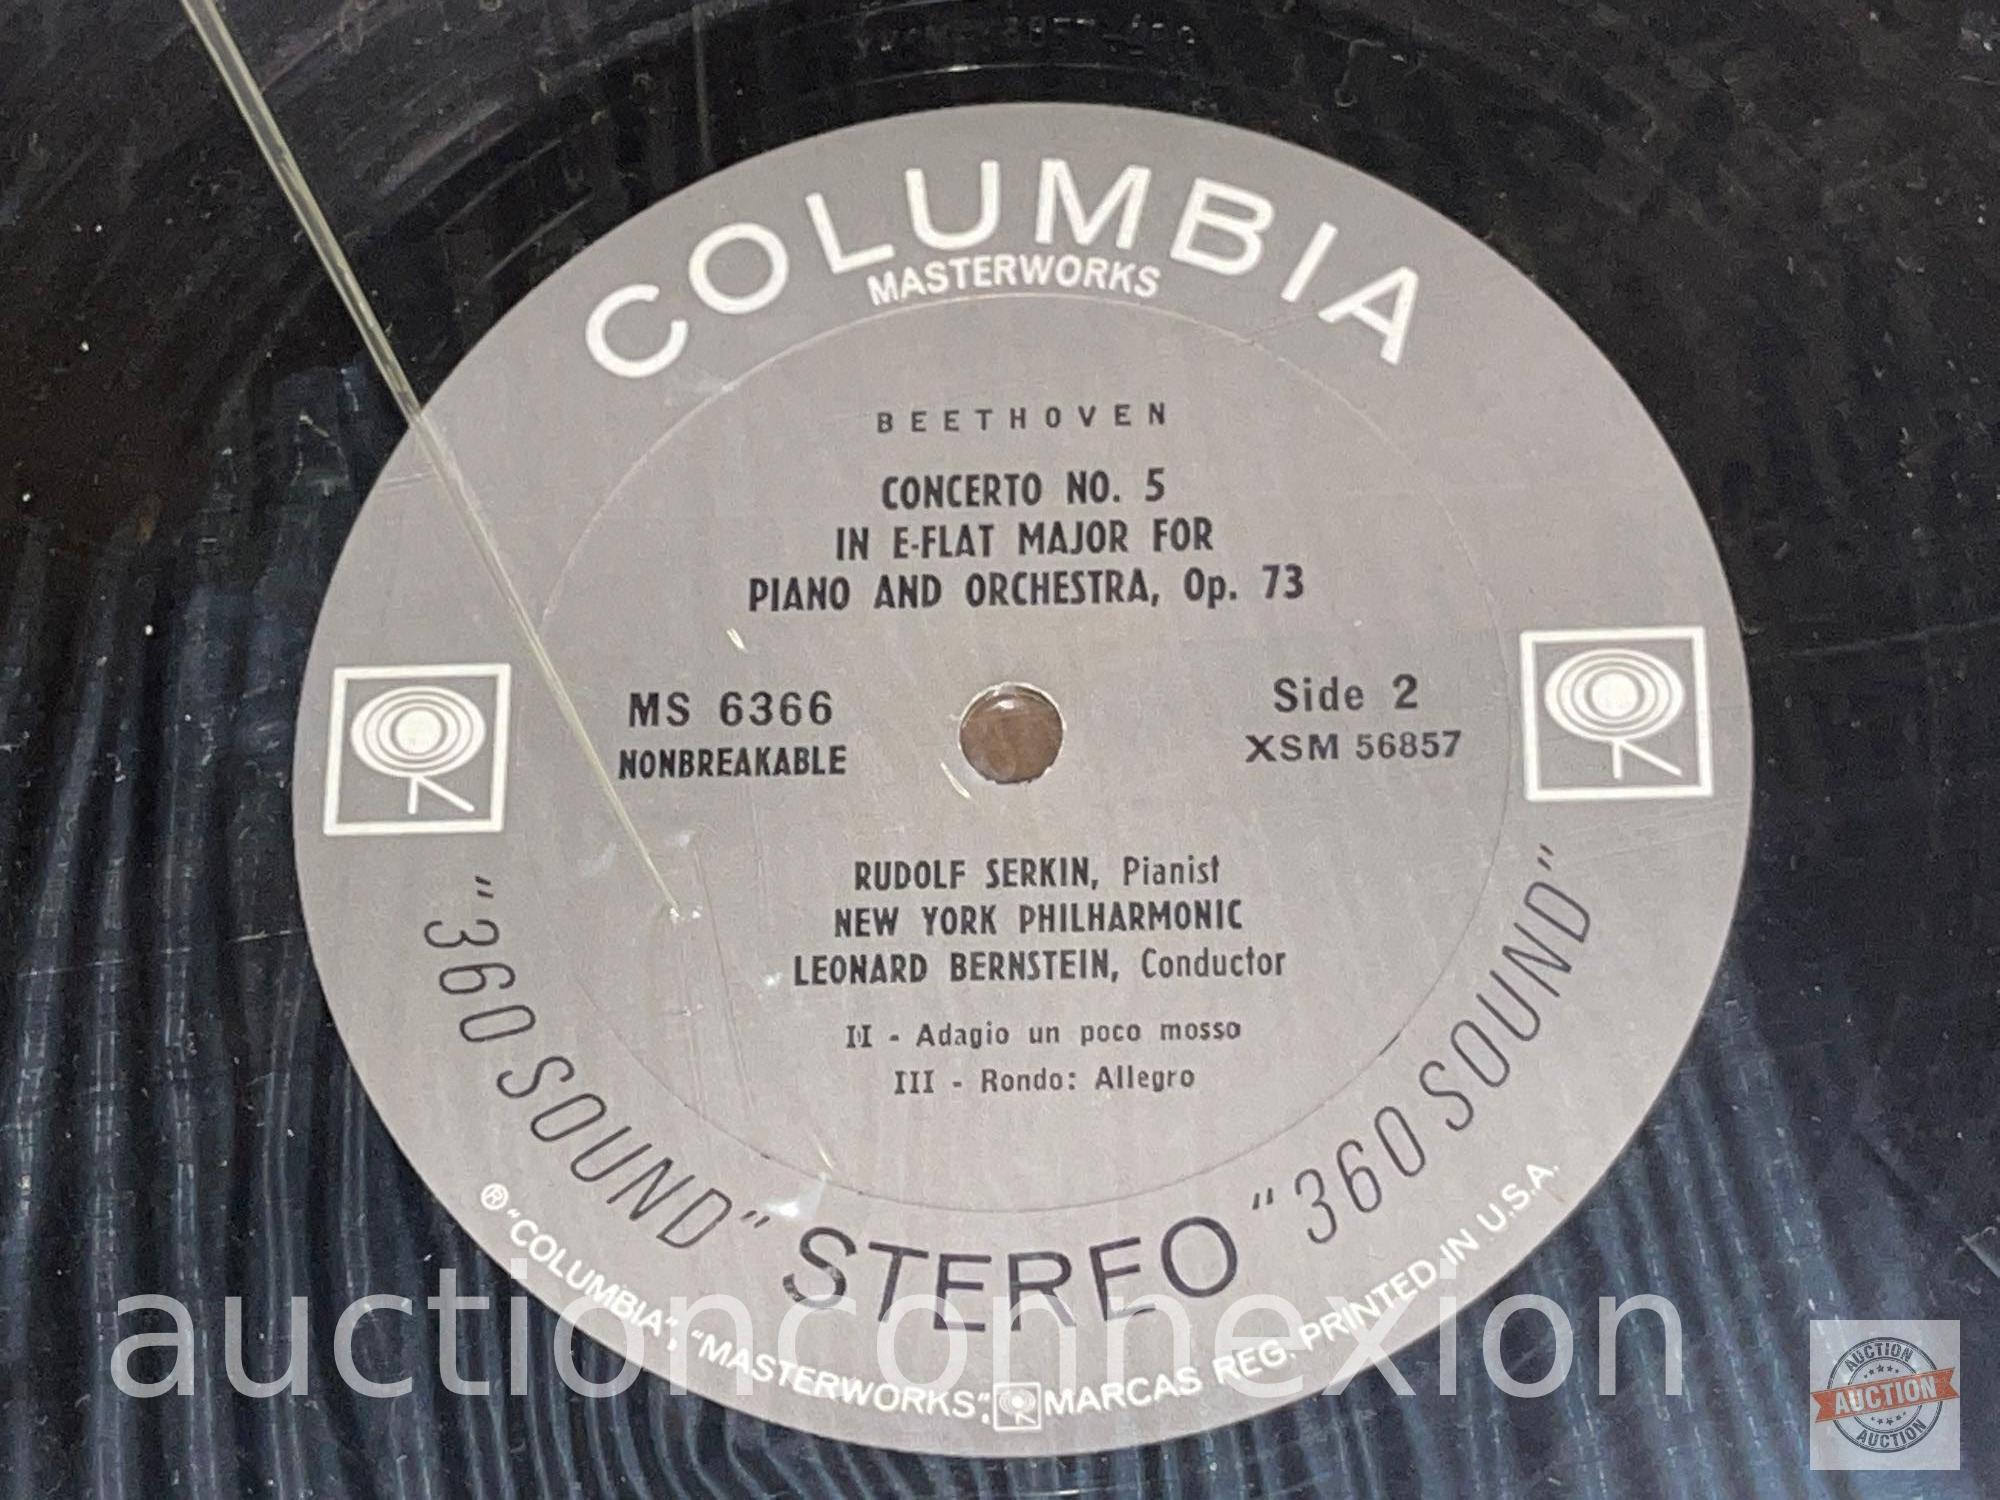 Record Album - 2 Columbia Records, 1962 New York Philharmonic and the Philadelphia Orchestra